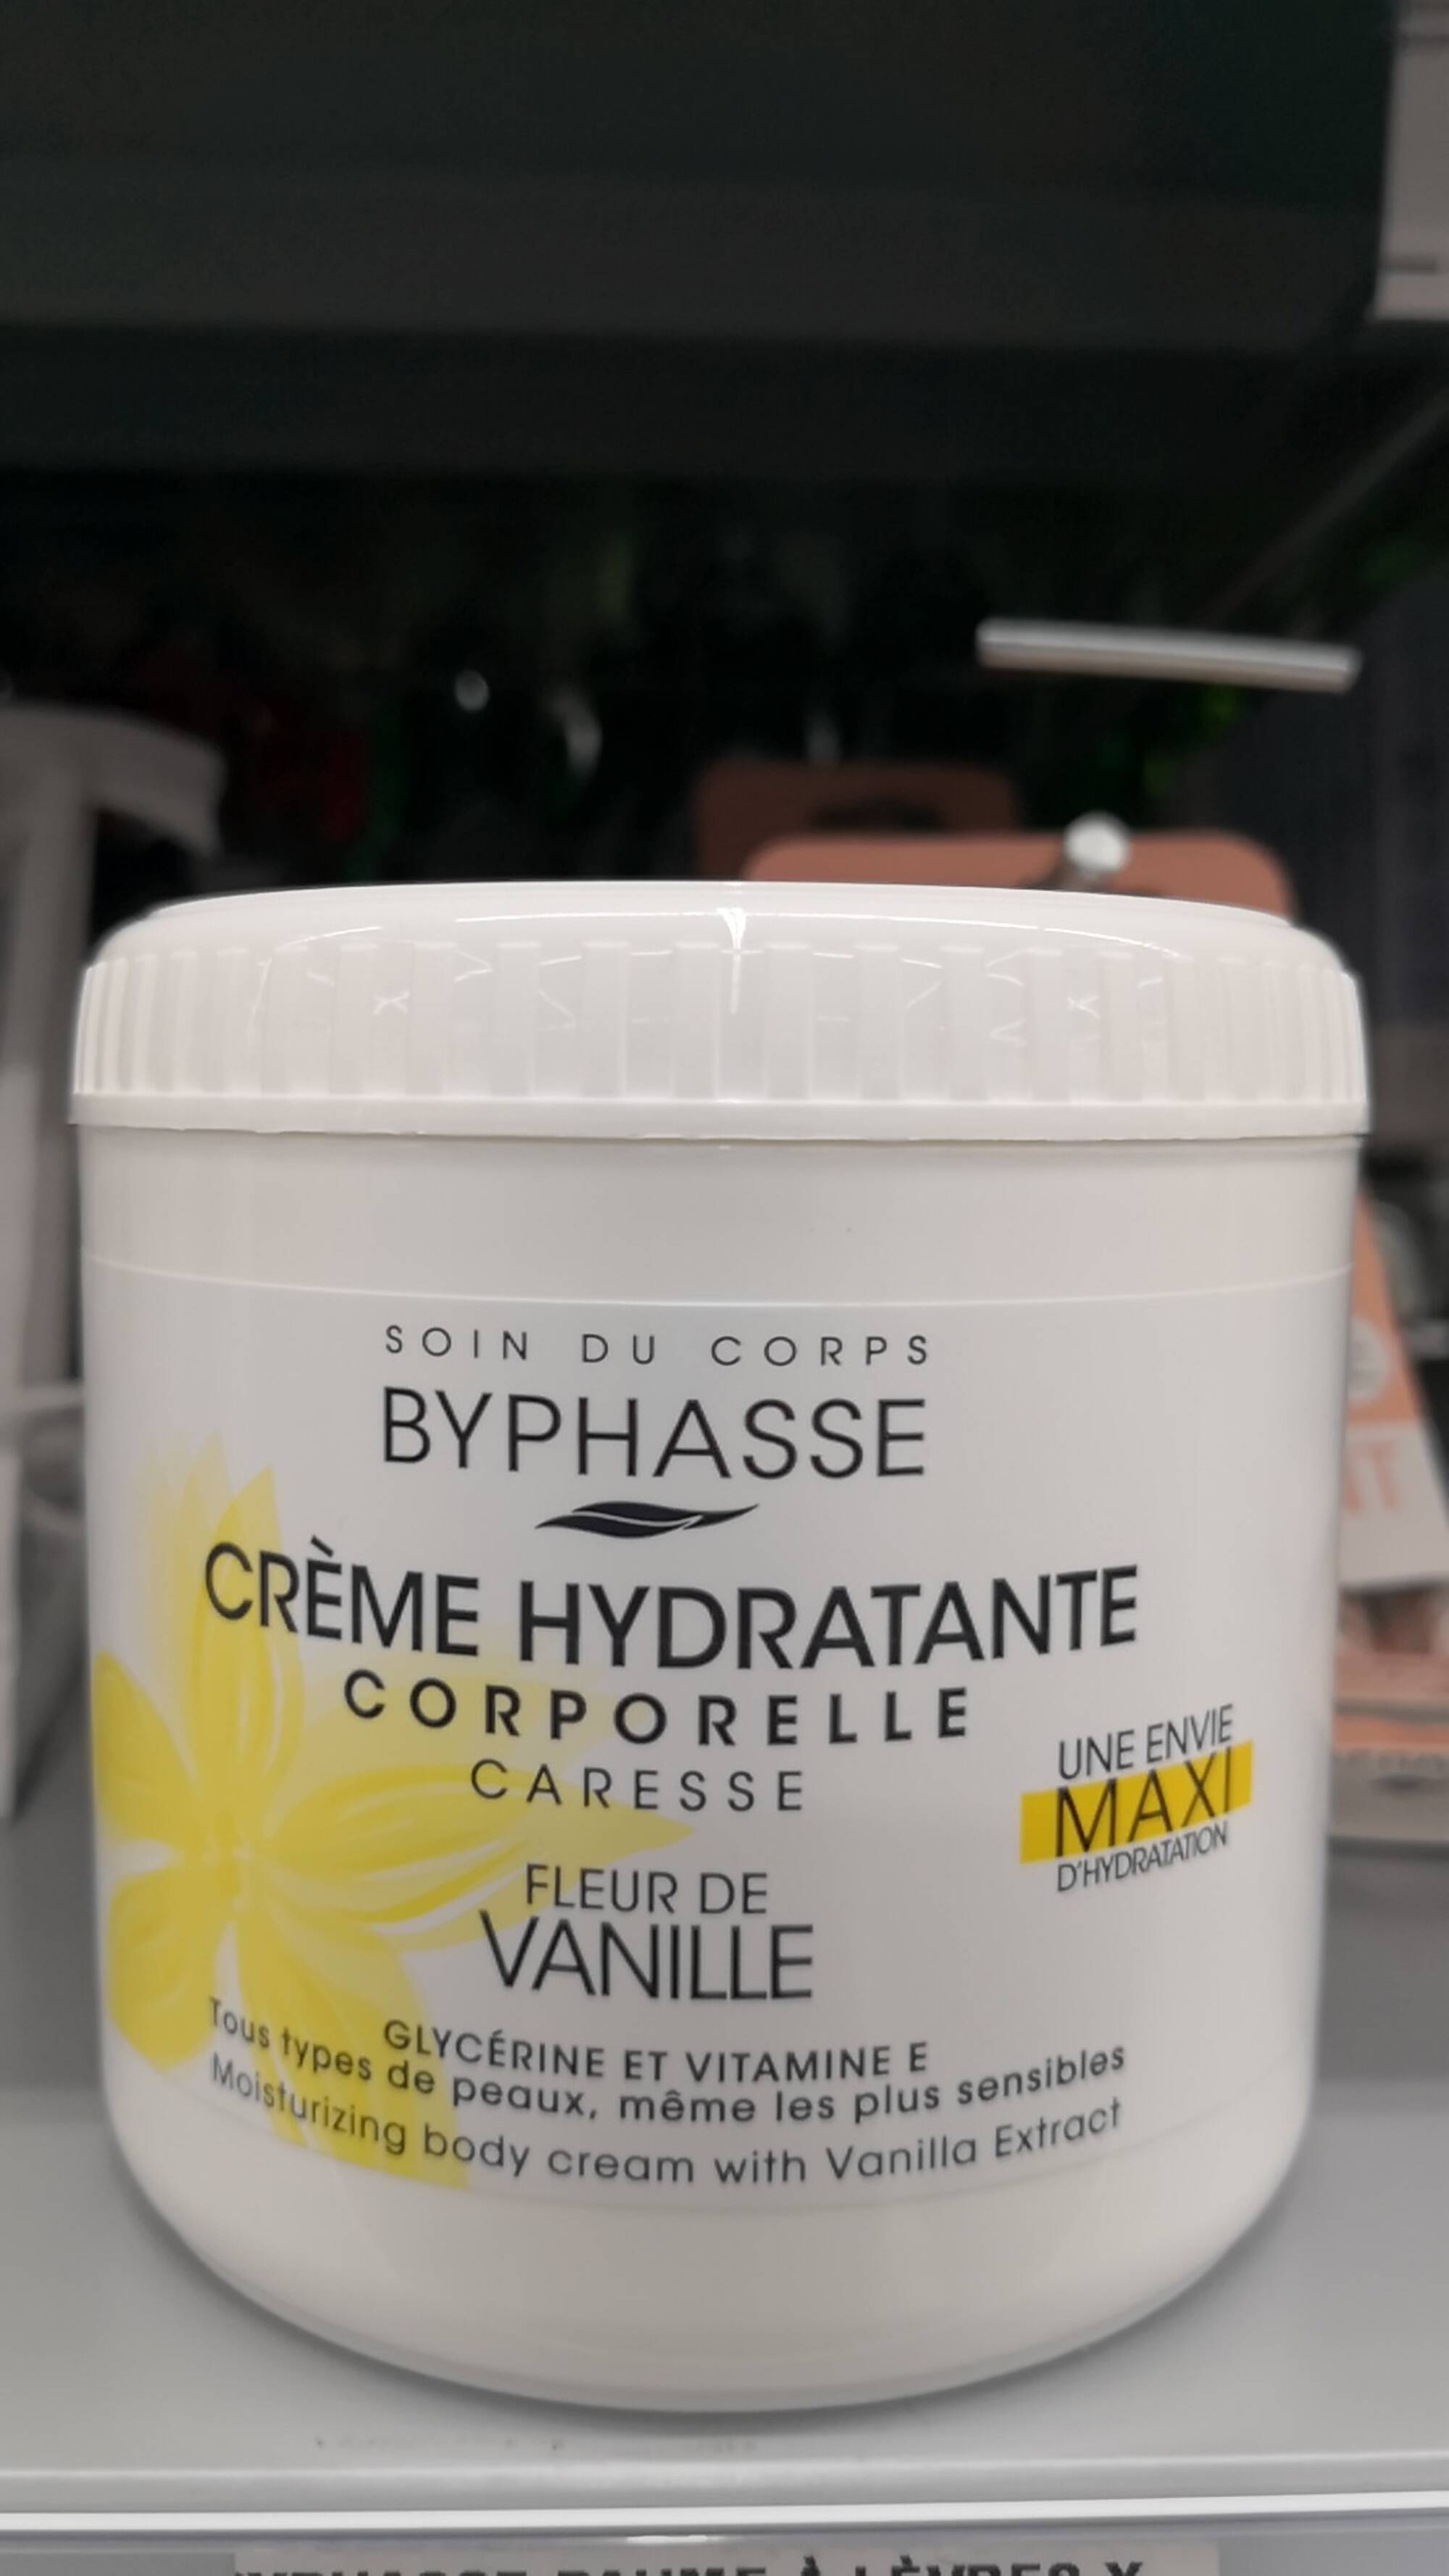 BYPHASE - Crème hydratante corporelle vanille